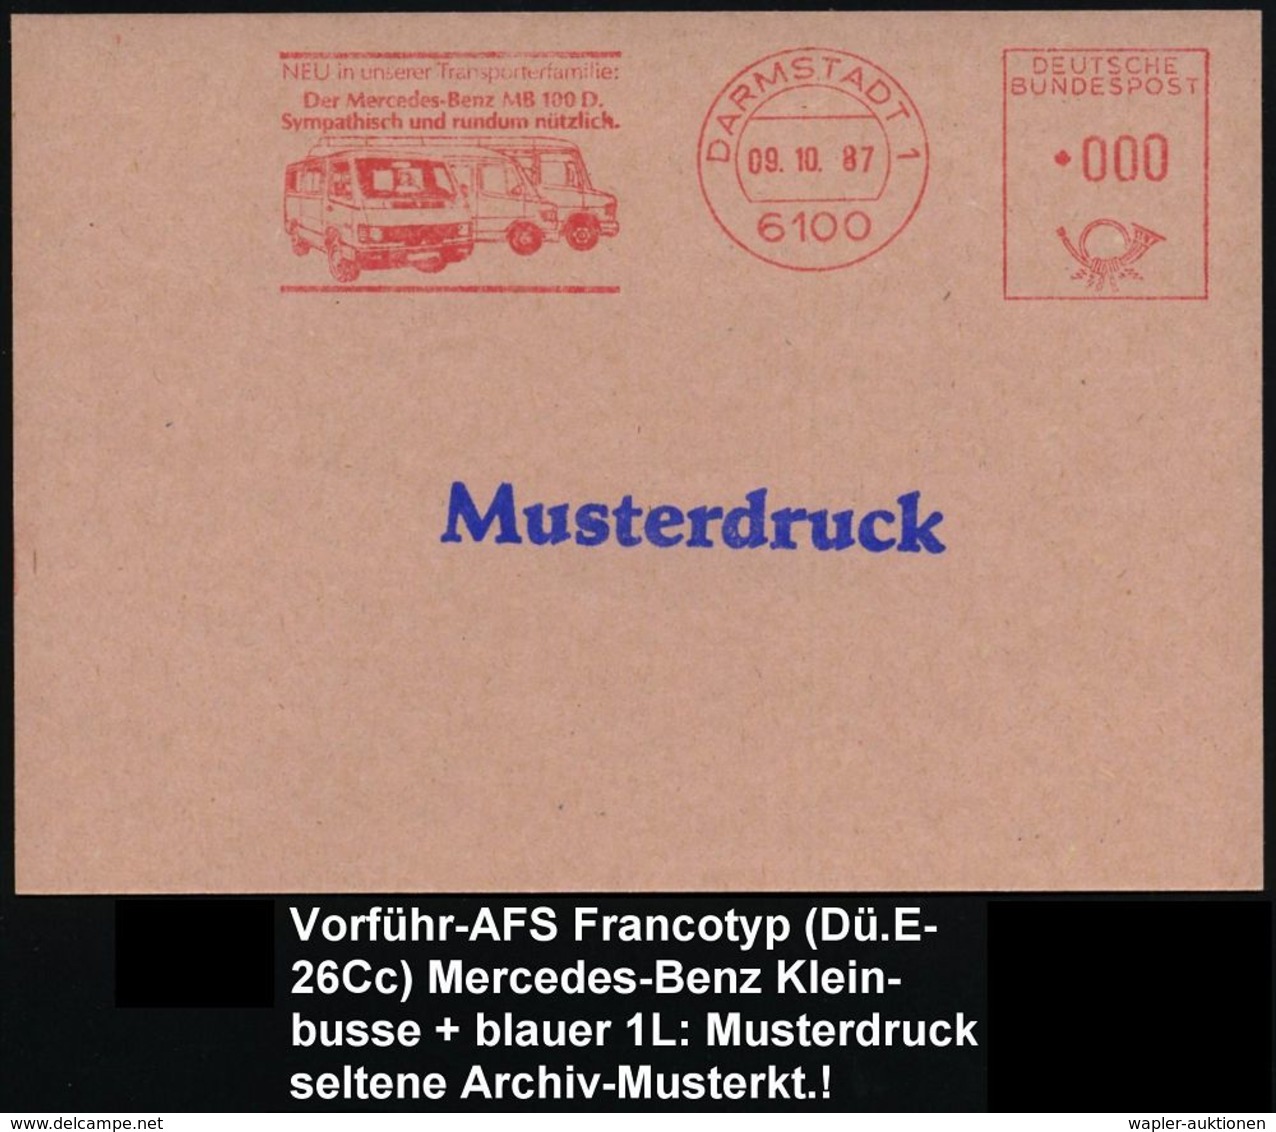 MERCEDES-BENZ  / DAIMLER BENZ : 6100 DARMSTADT 1/ ..Der Mercedes-Benz 100 D... 1987 (9.10.) AFS In 000, Francoty-Archiv- - Cars